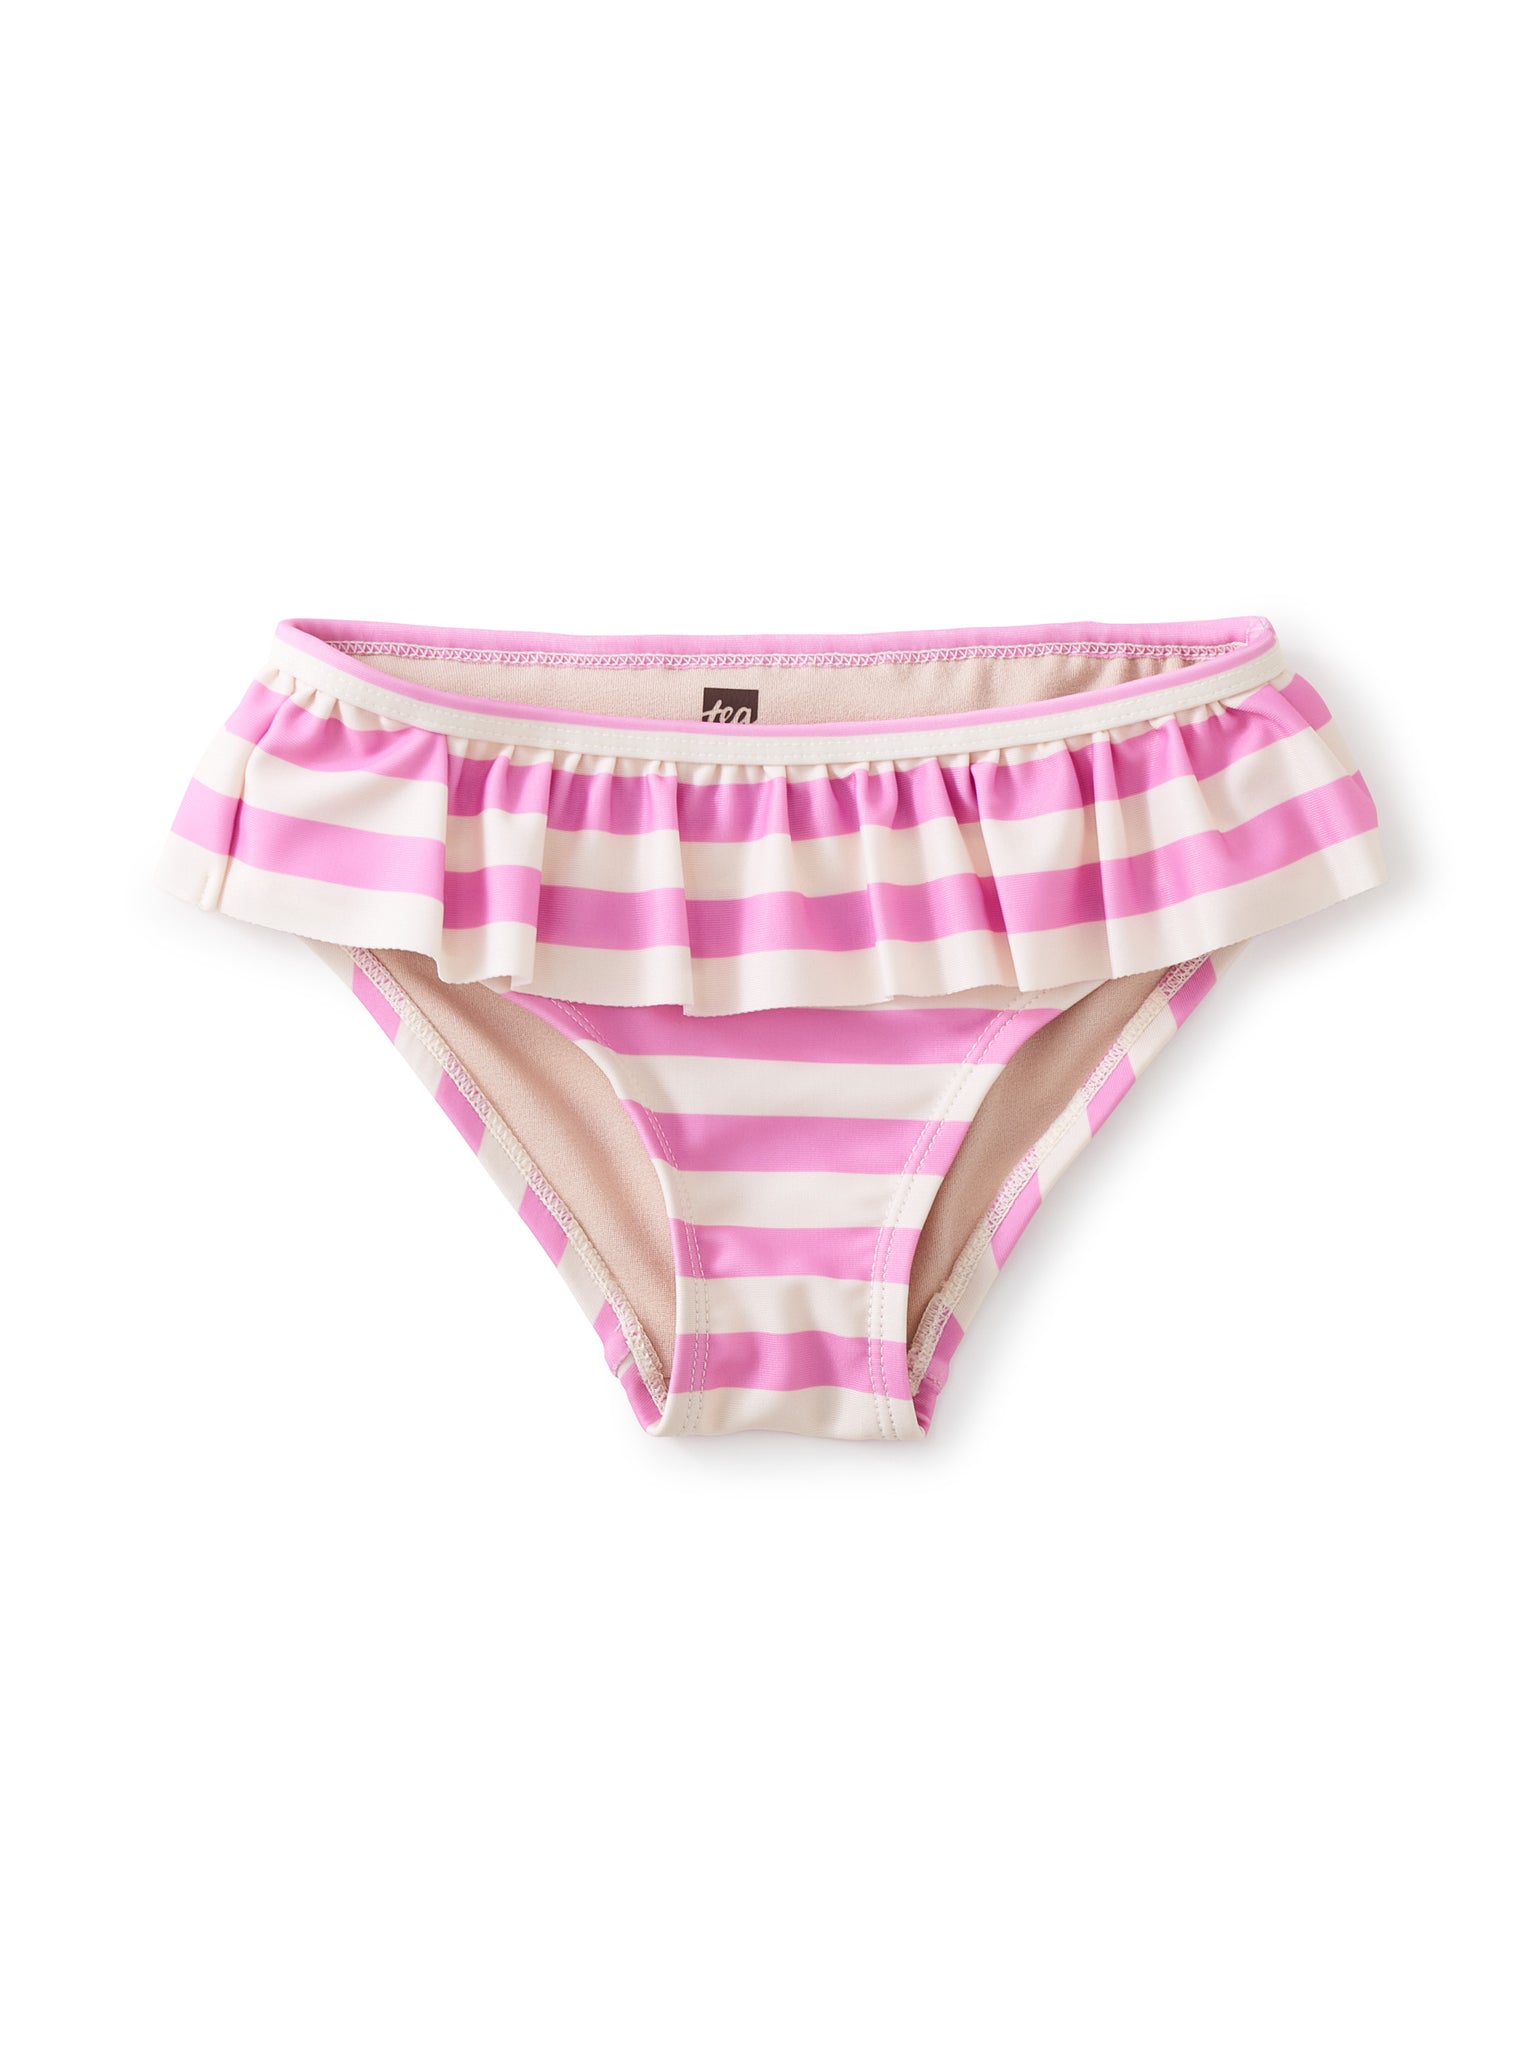 Young Girls Bottom in Pink Bikini Stock Image - Image of panties